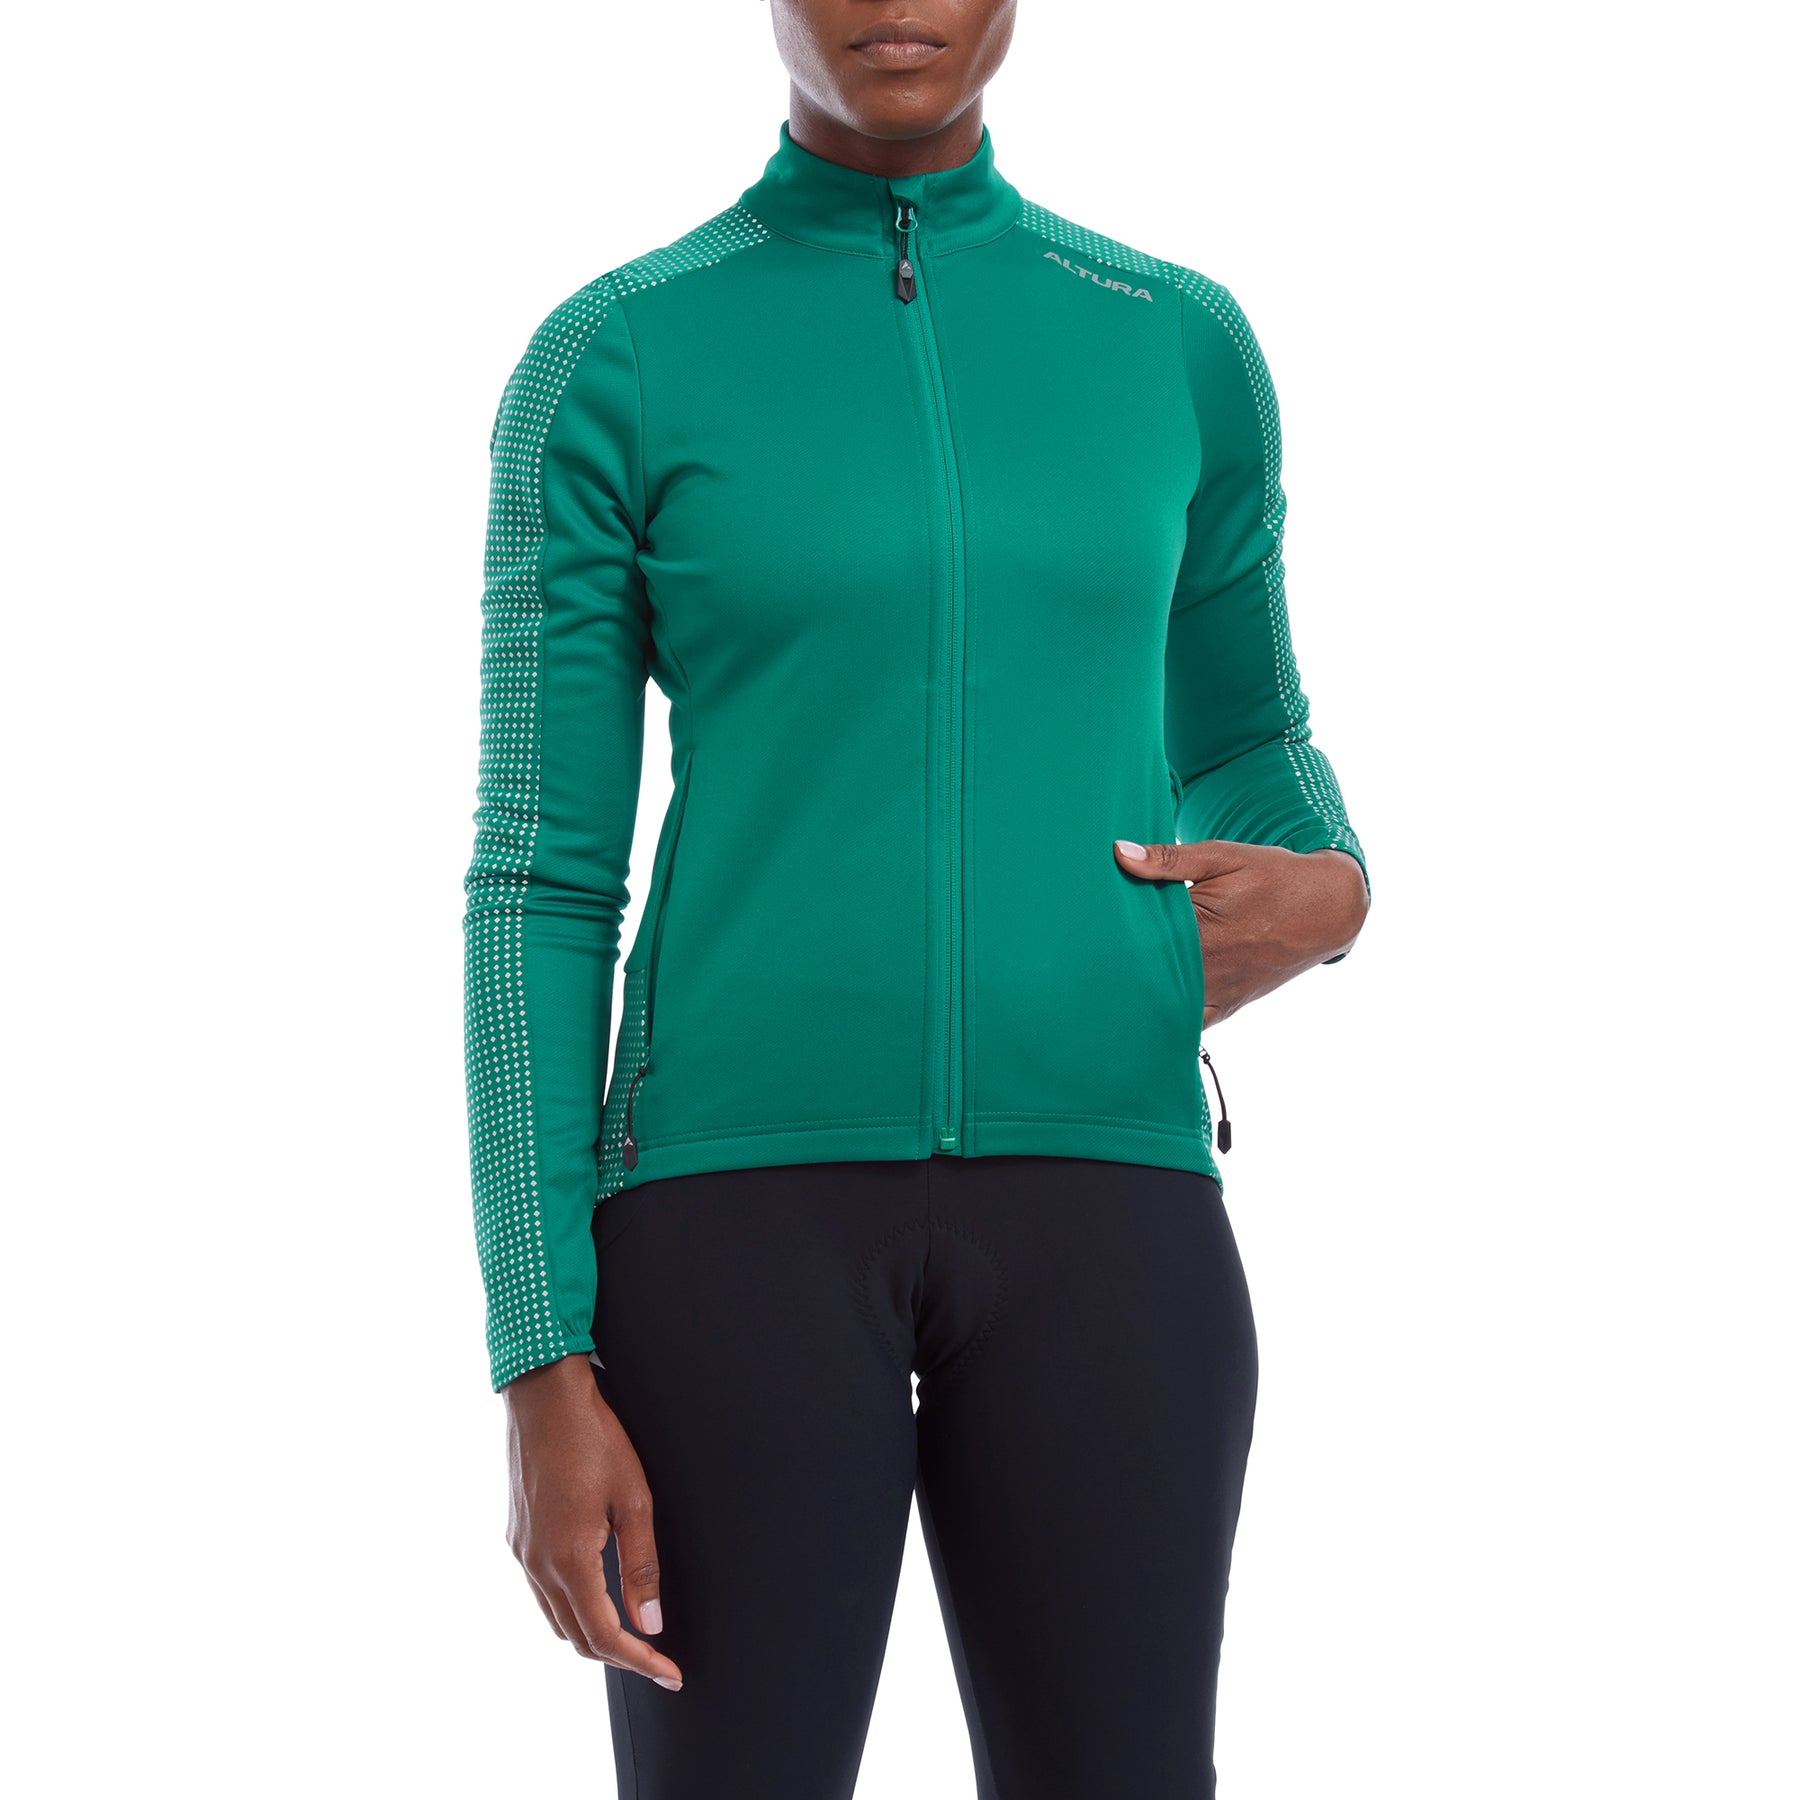 Altura Nightvision Women's Long Sleeve Jersey Green 10